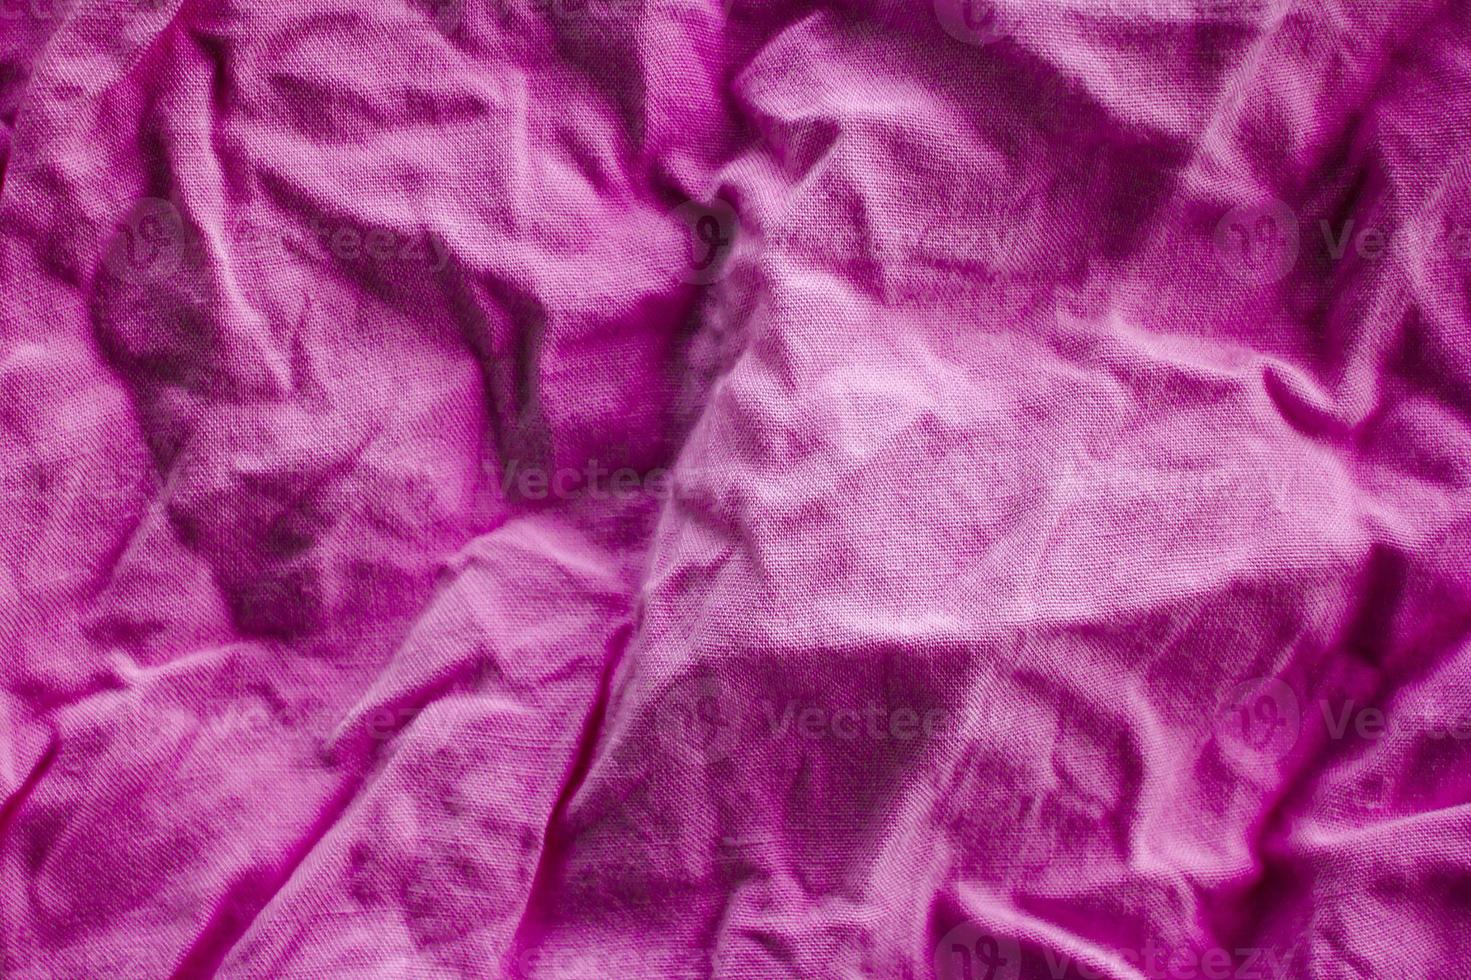 Crumpled fabric texture photo